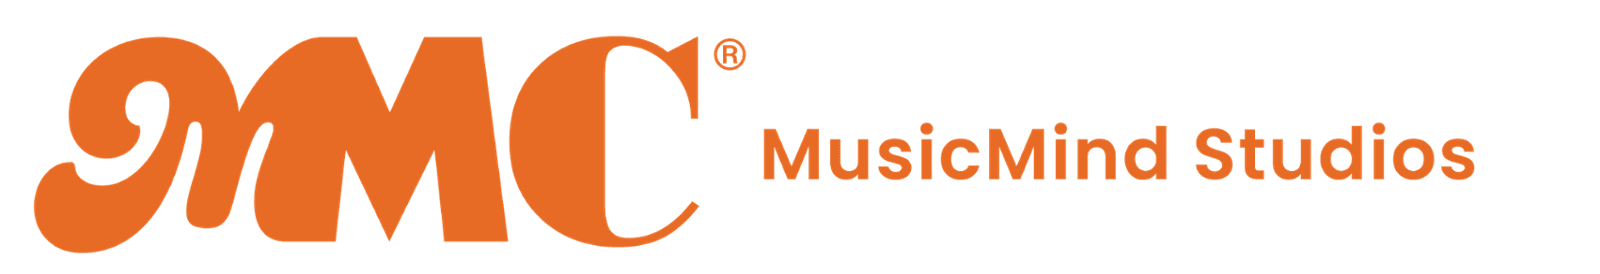 MusicMind Studios | Recording Studio Pasadena